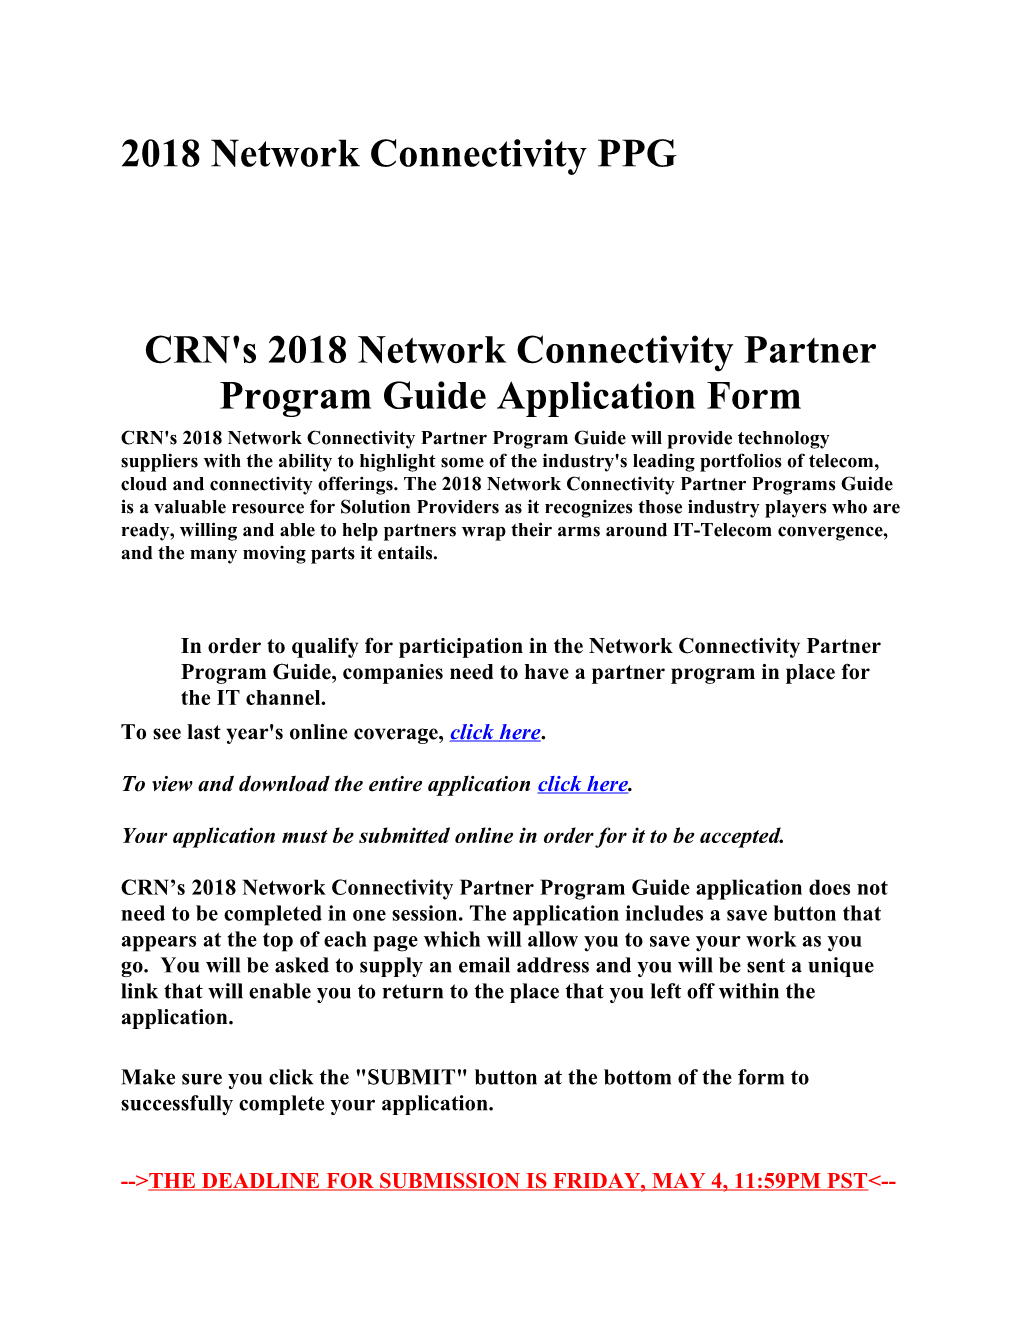 CRN's 2018 Network Connectivity Partner Program Guide Application Form